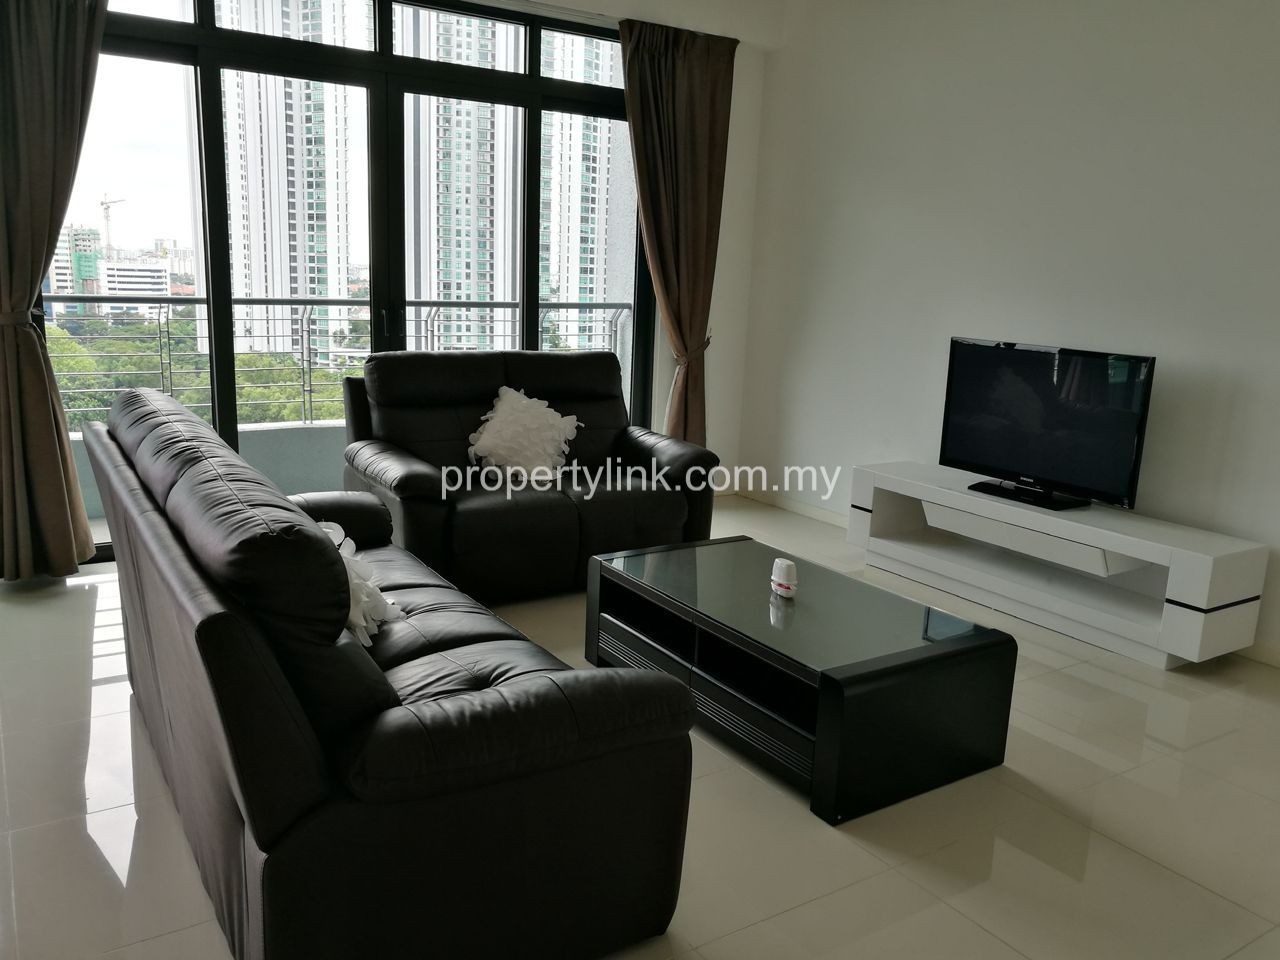 Tropicana Avenue Condominium, Tropicana, Petaling Jaya, Selangor, Malaysia, For Sale, Web ID TR00504S